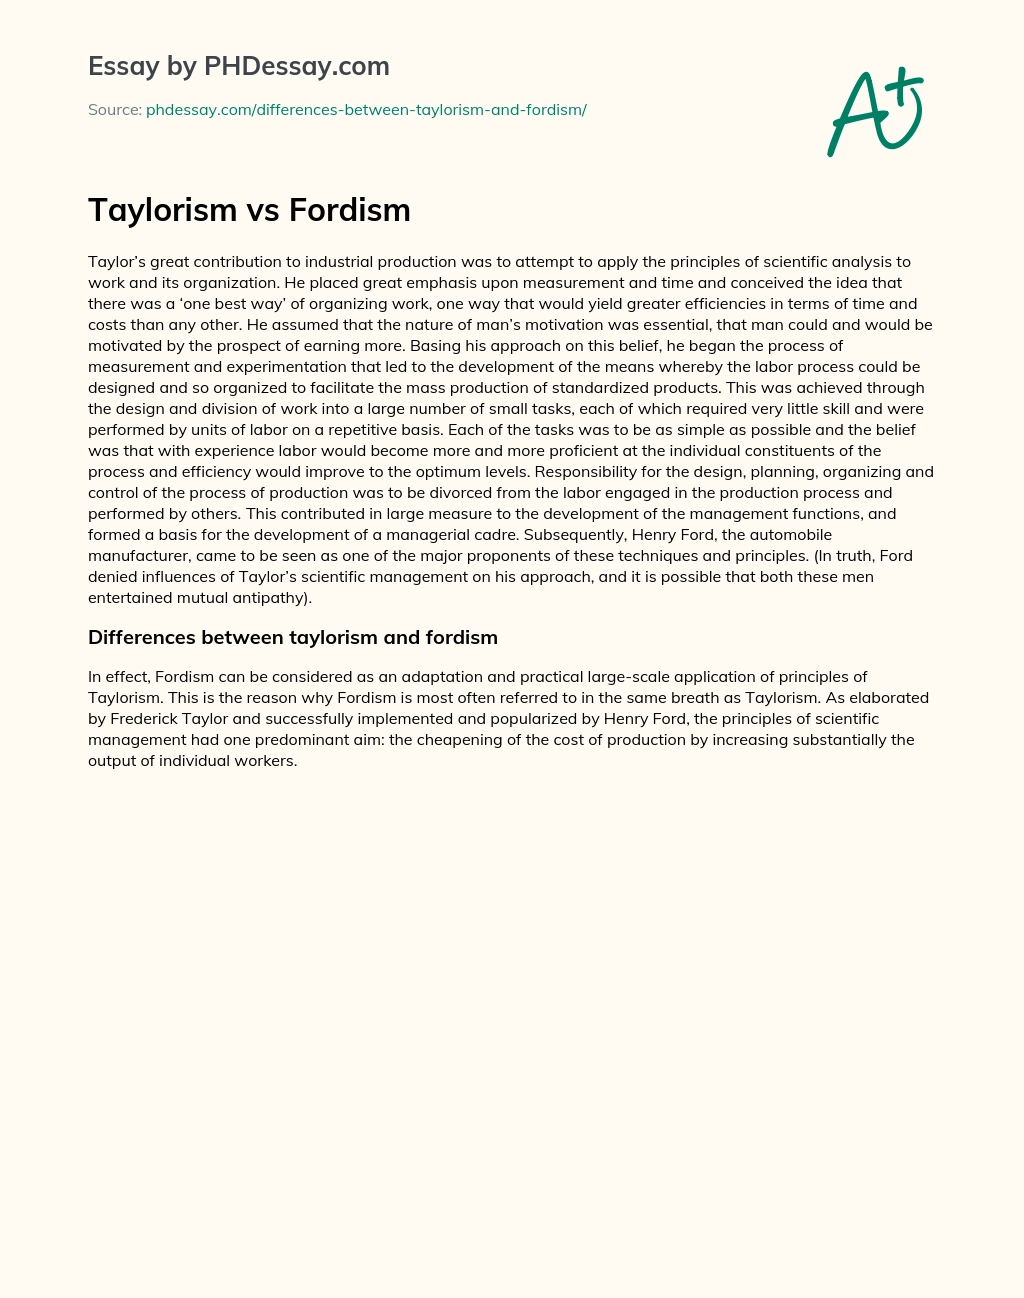 Taylorism vs Fordism essay